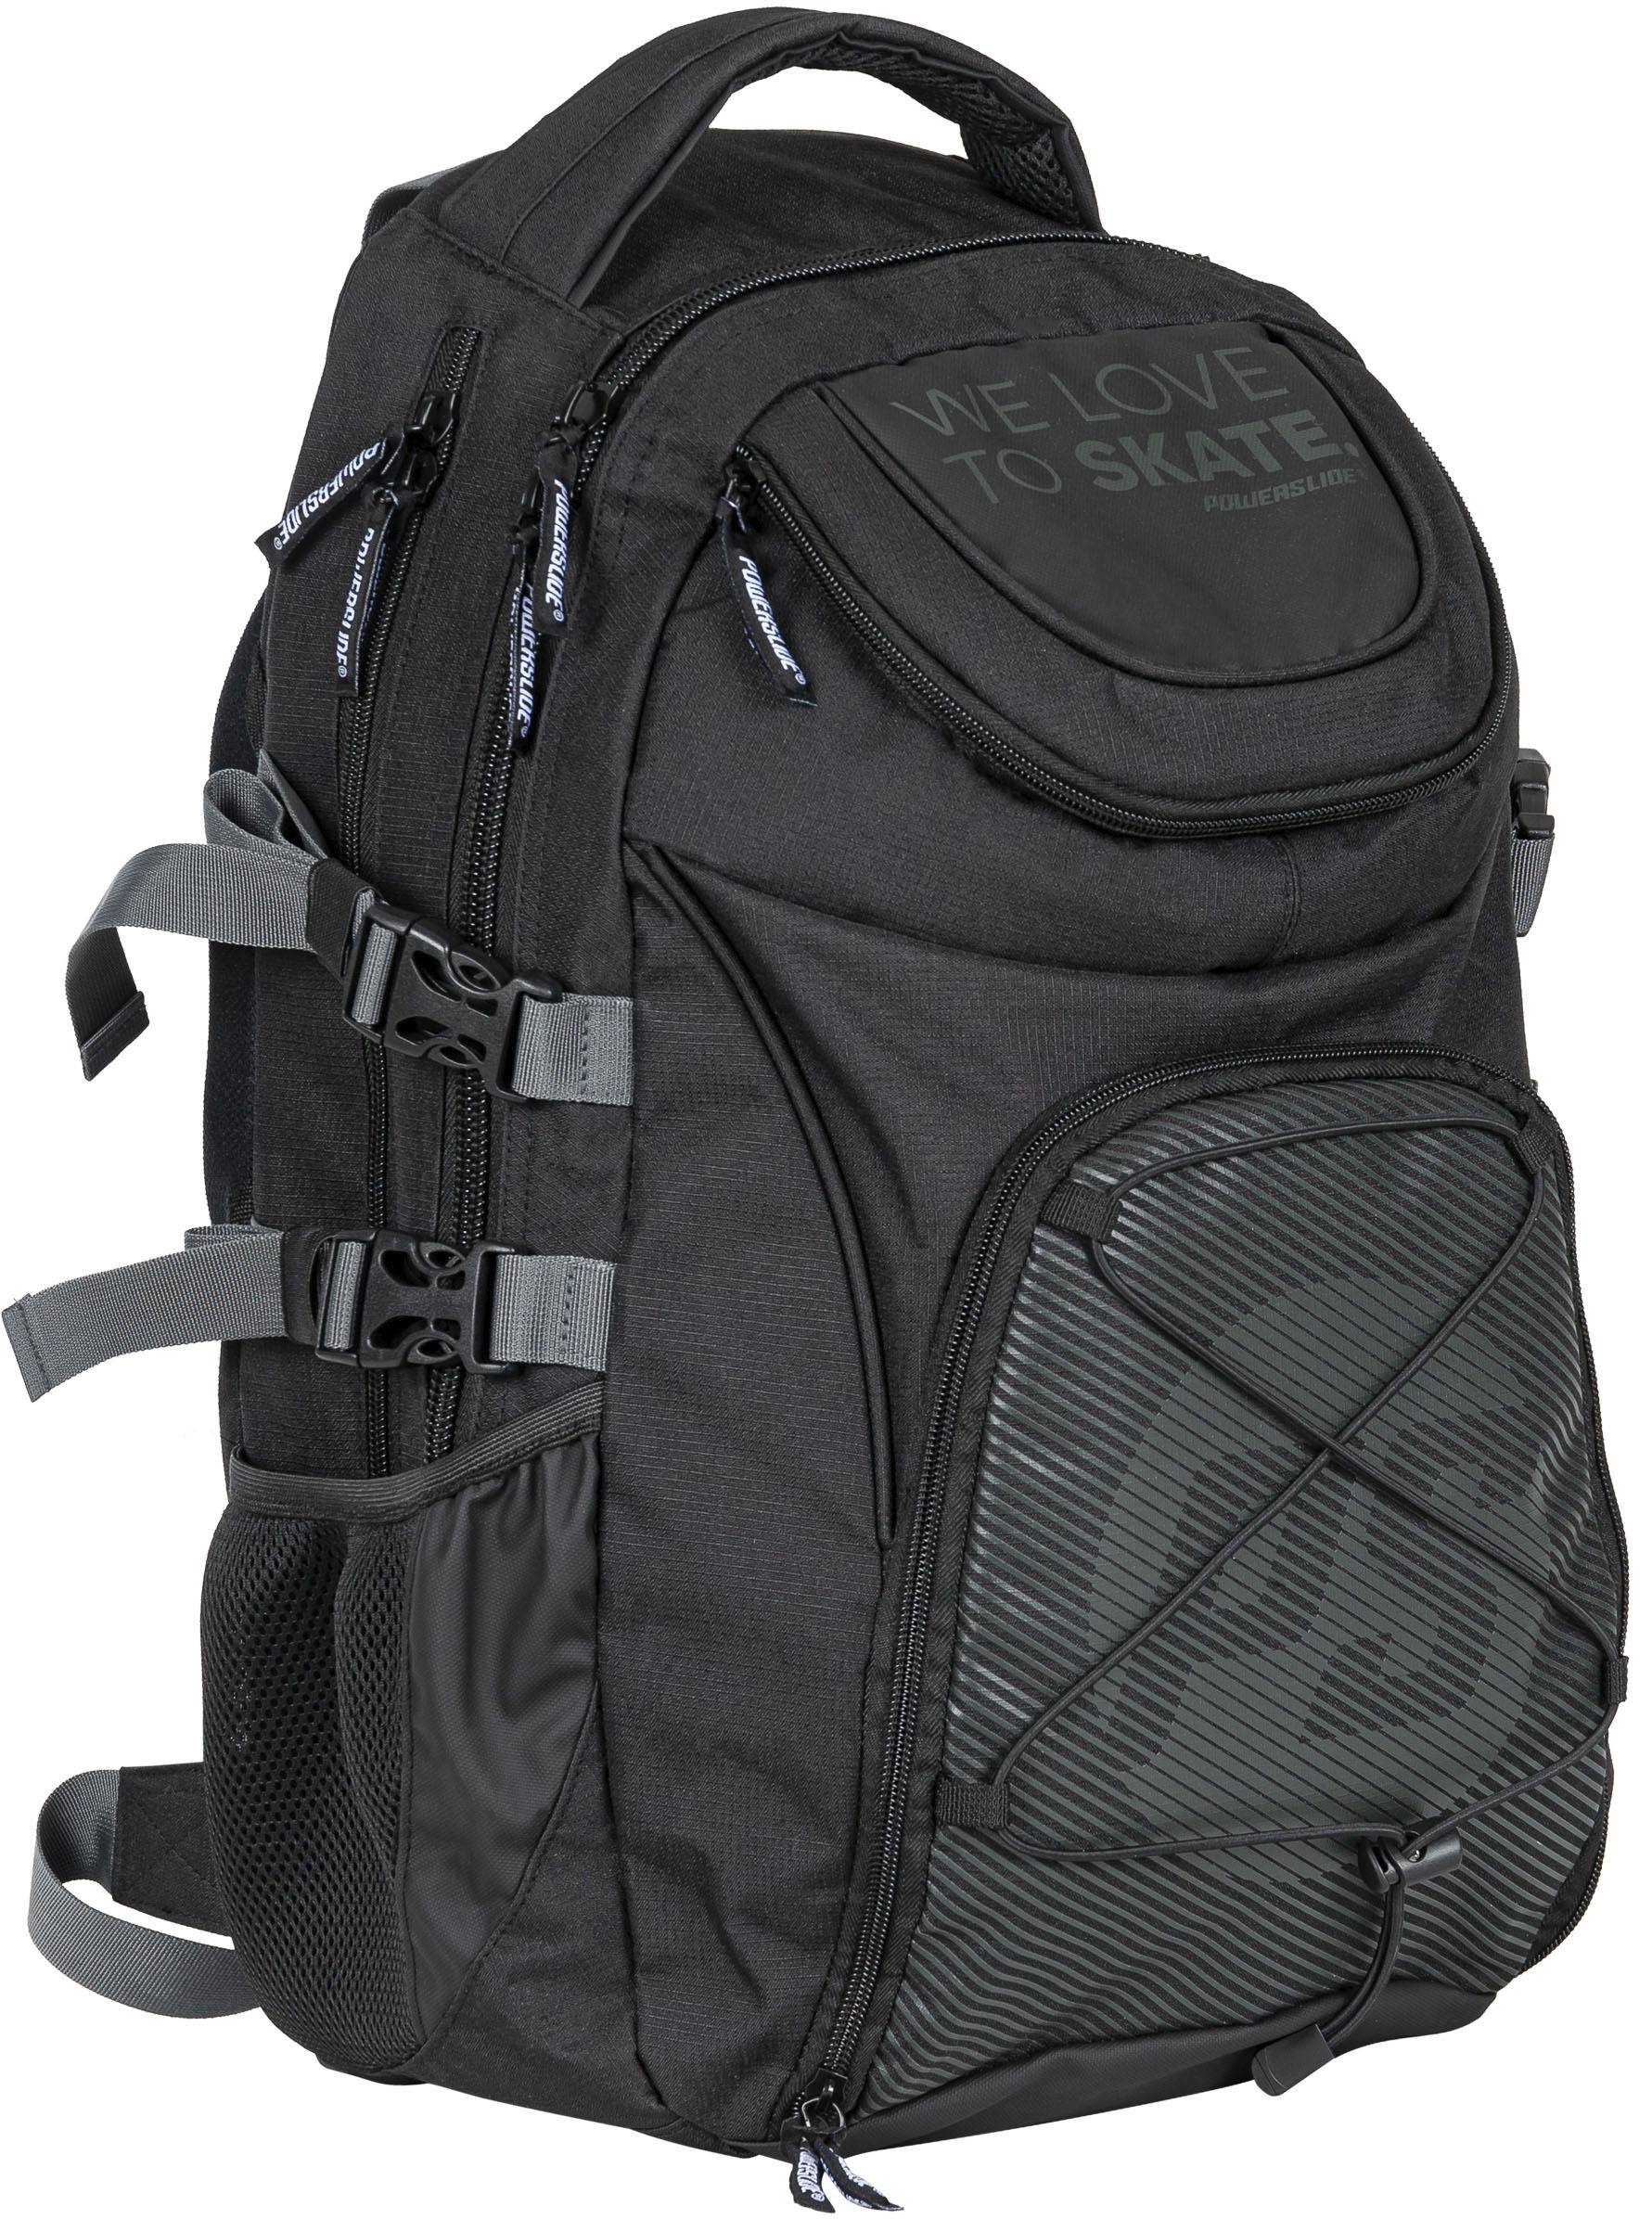 Powerslide Sportrucksack »WeLoveToSkate Backpack« Powerslide schwarz